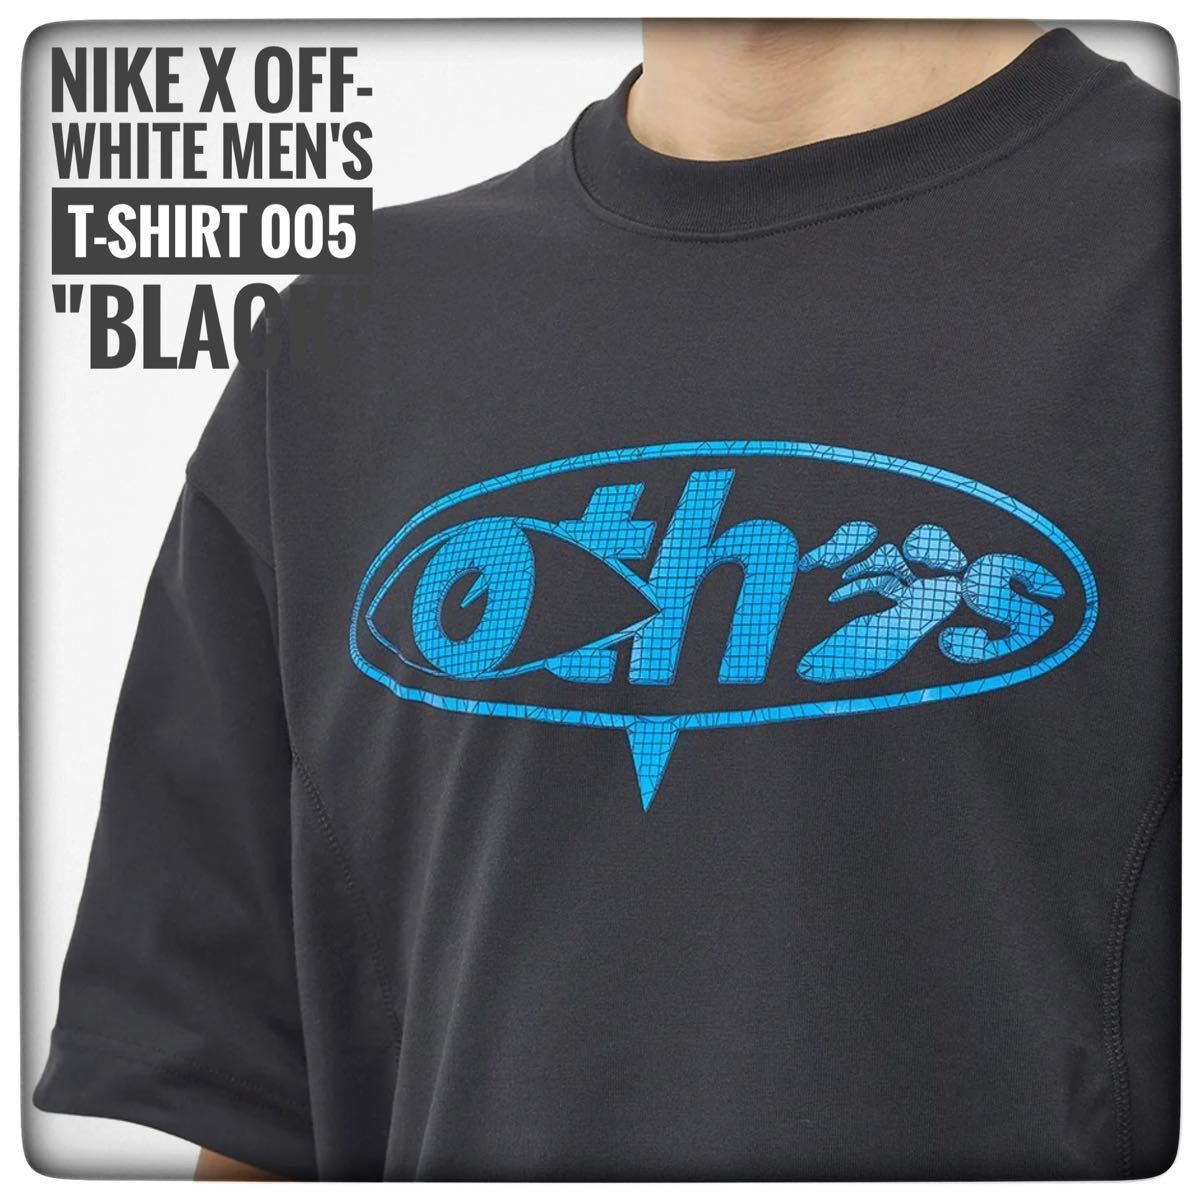 【XLサイズ】Nike x Off-White Men's T-shirt 005 